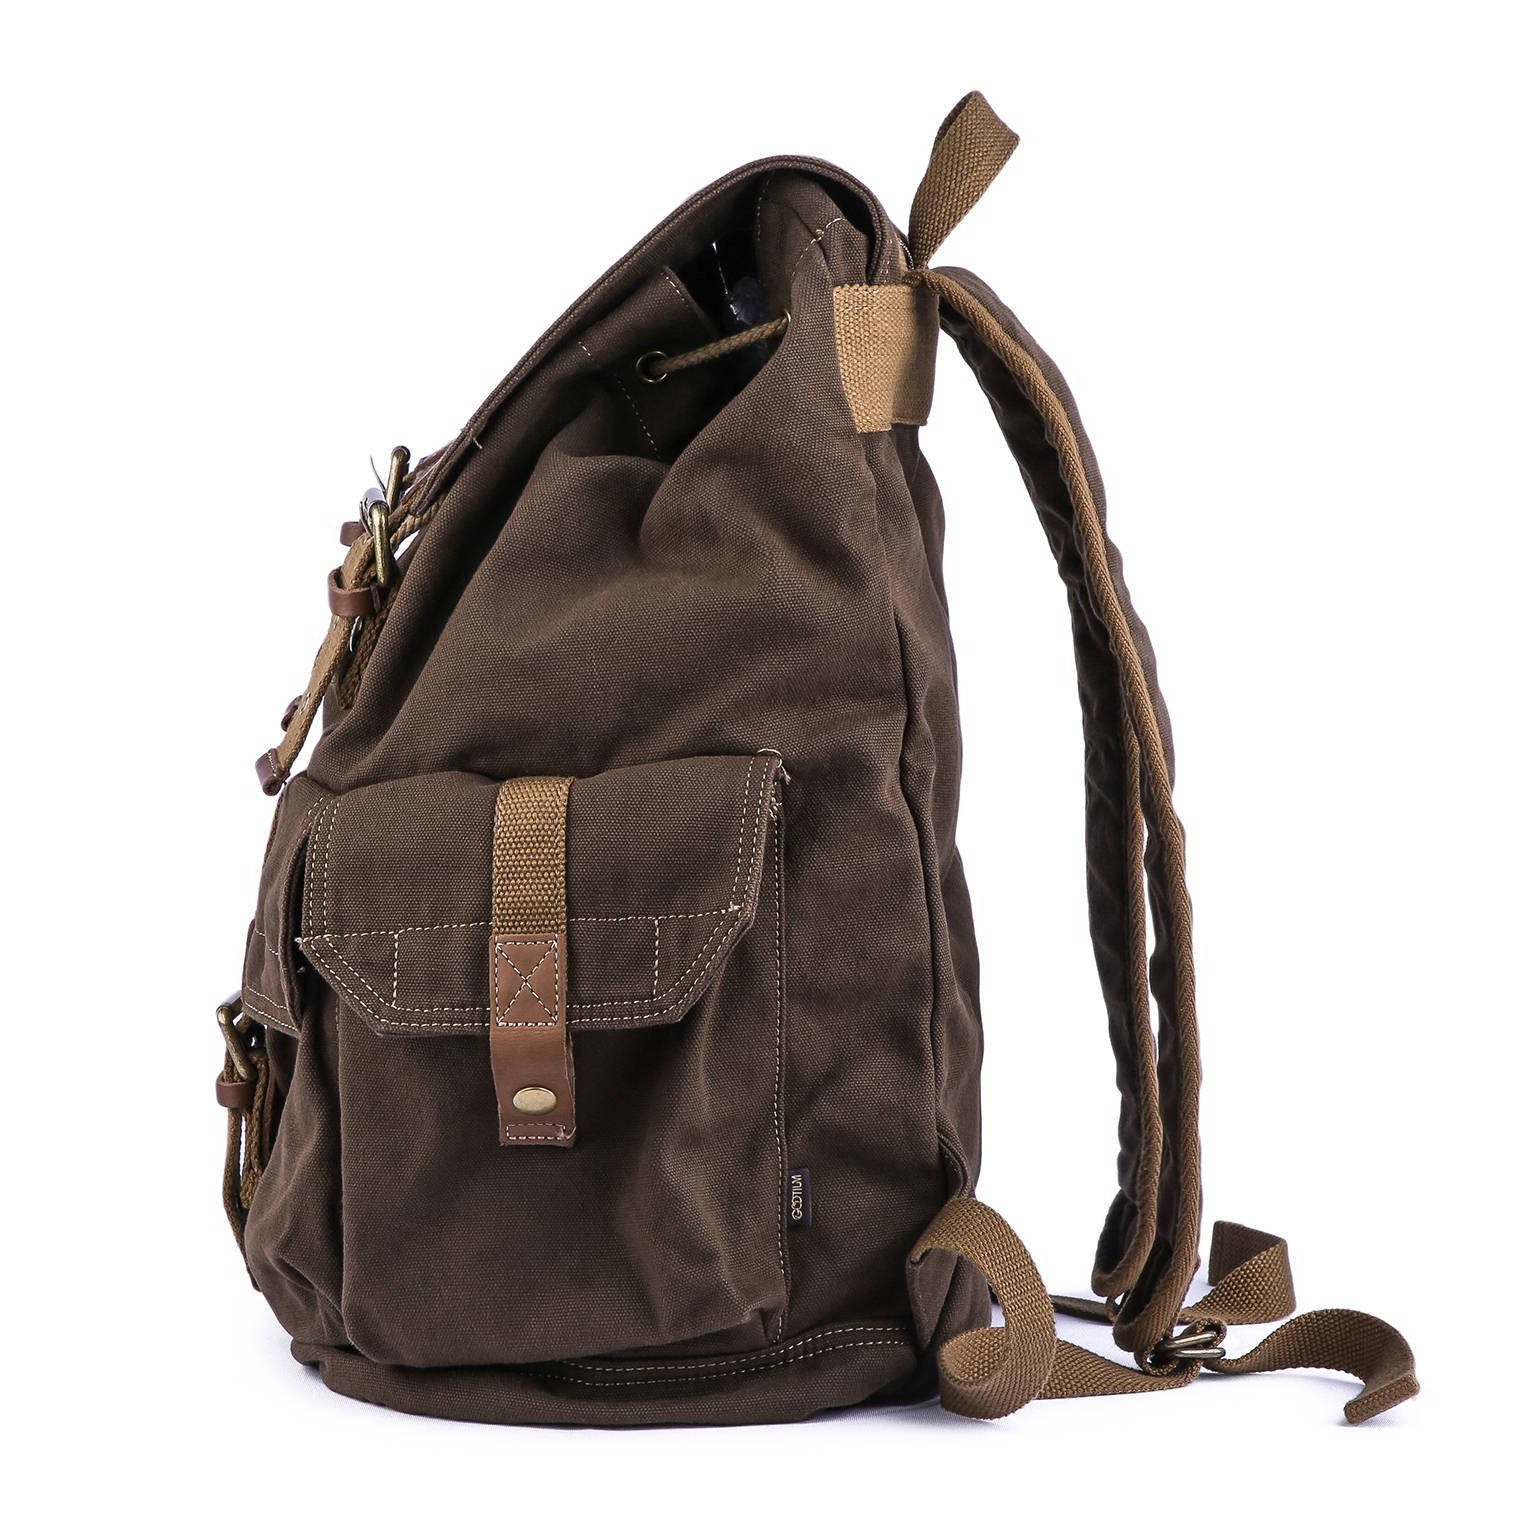 Gootium Tie-Dyed Backpack - Canvas Leather Travel Daypack Vintage Rucksack